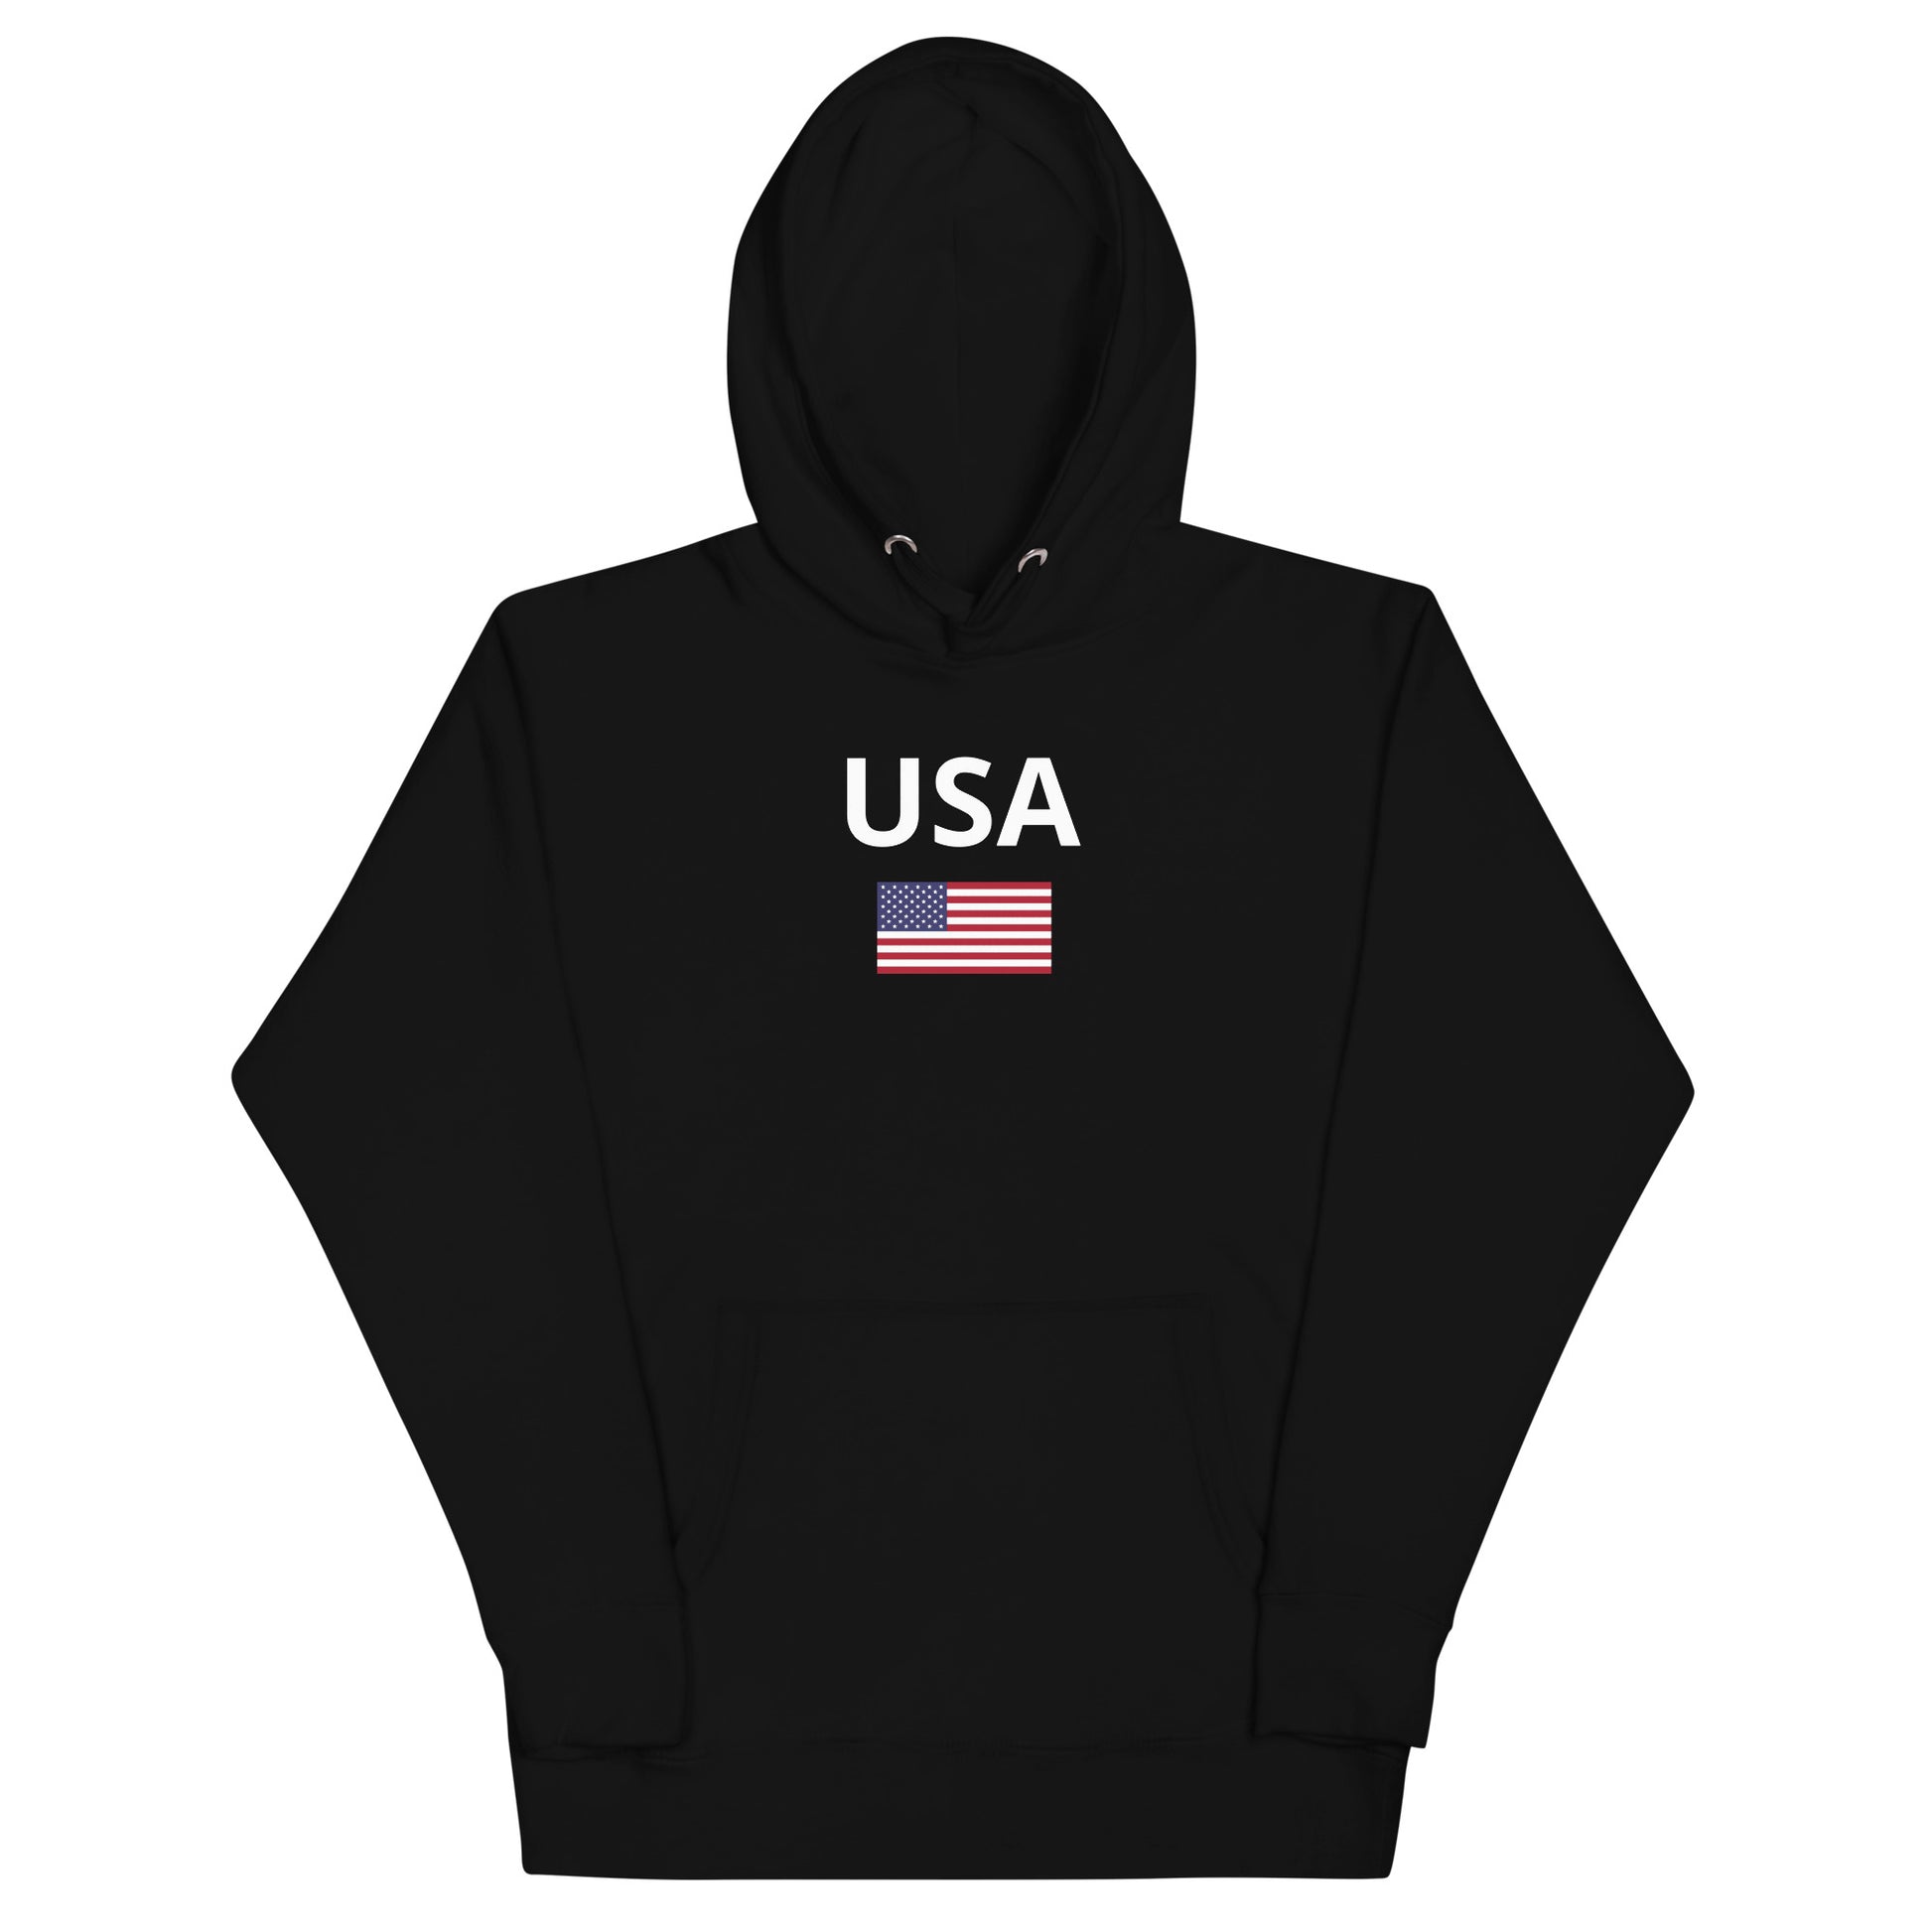 Black unisex hoodie sweatshirt says 'USA' and has a US flag 